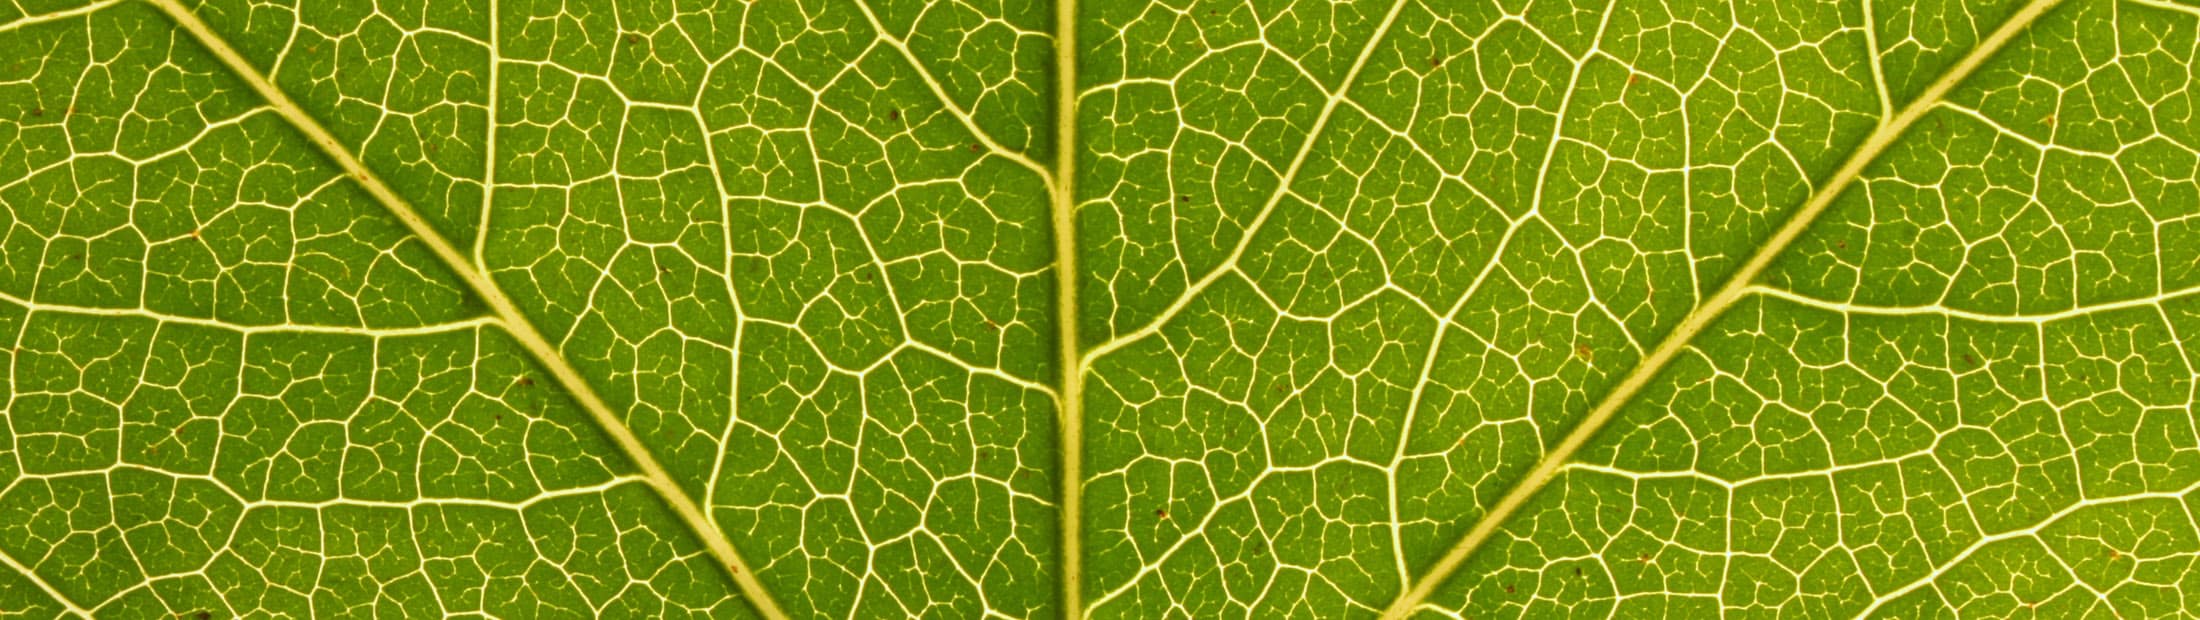 Environmental leaf fractal.